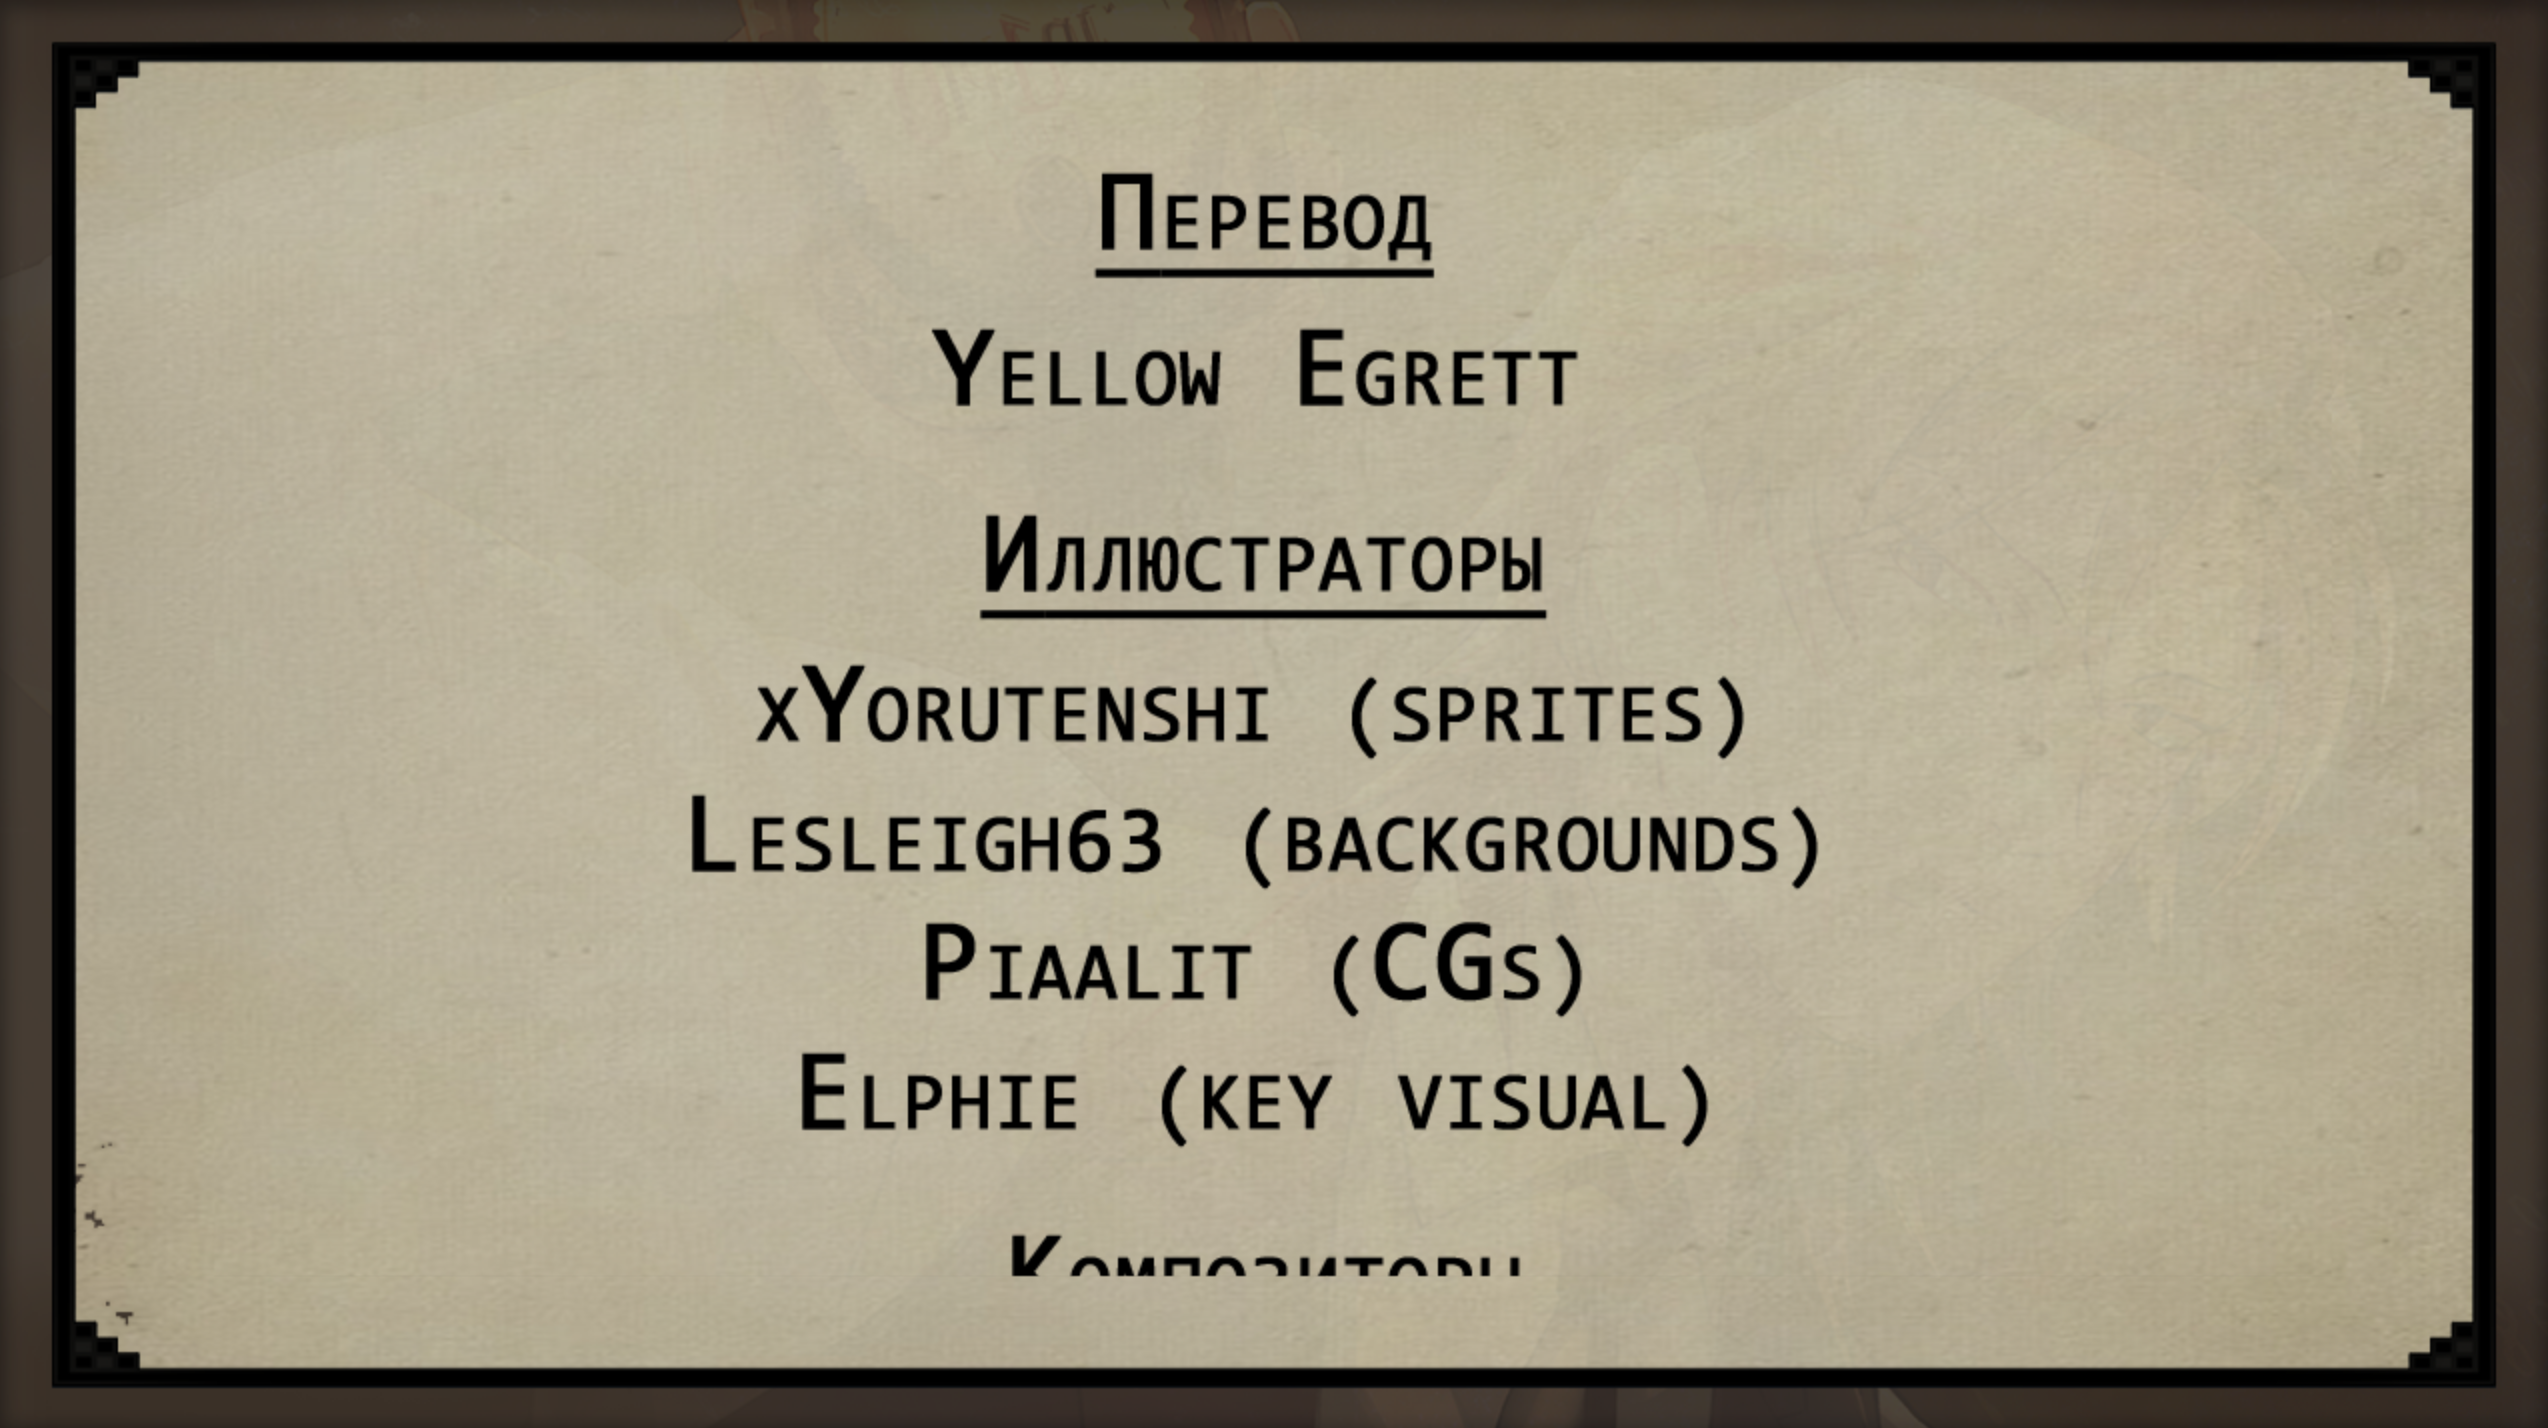 ingame credits screenshot showing yellow egrett as translator